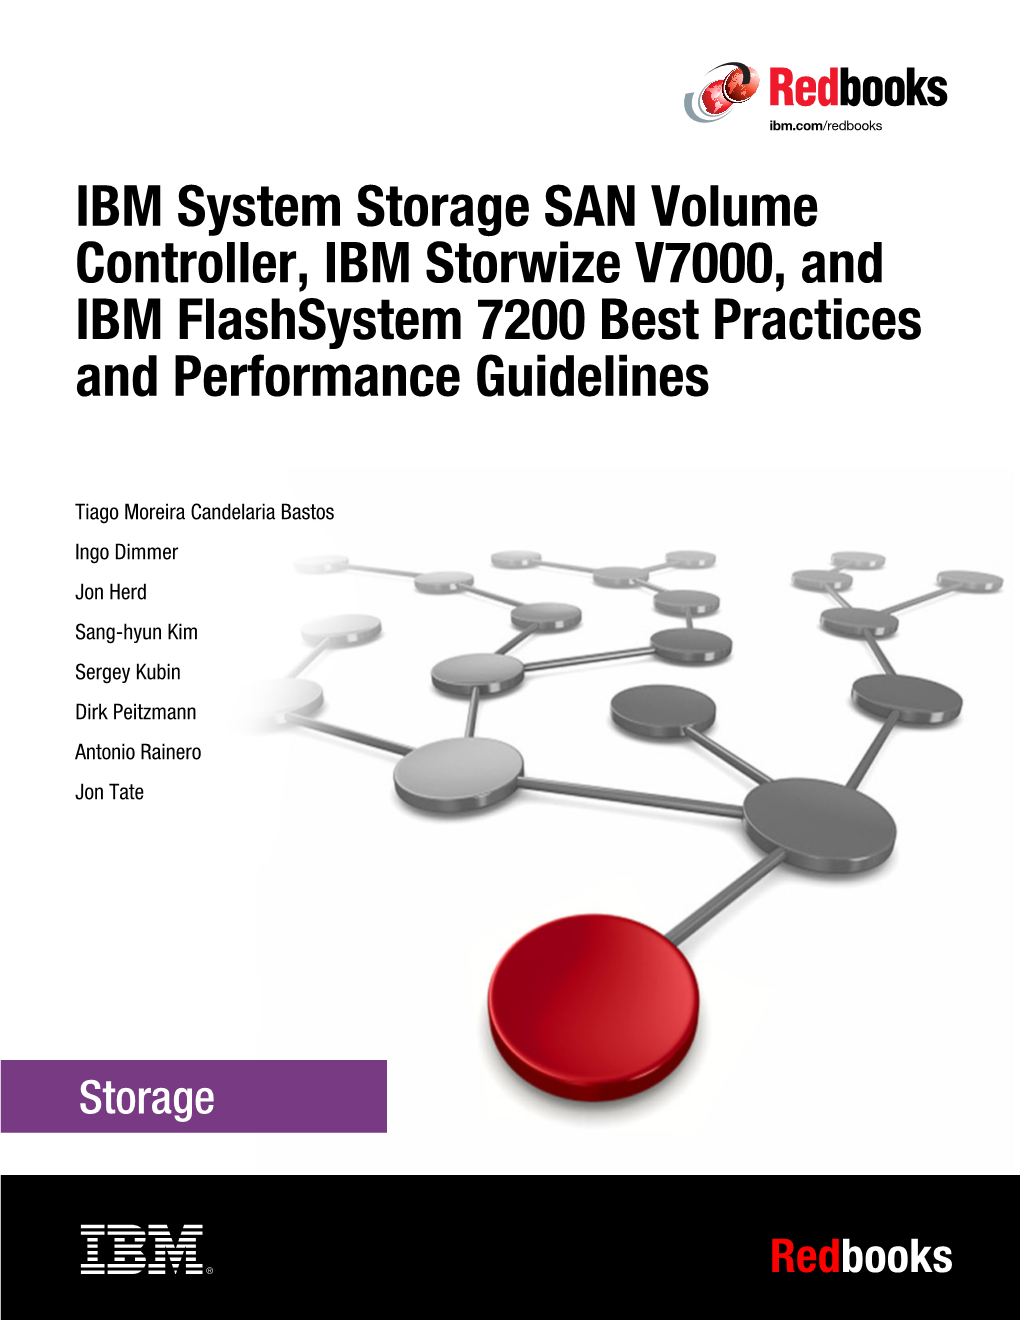 IBM System Storage SAN Volume Controller and Storwize V7000 Best